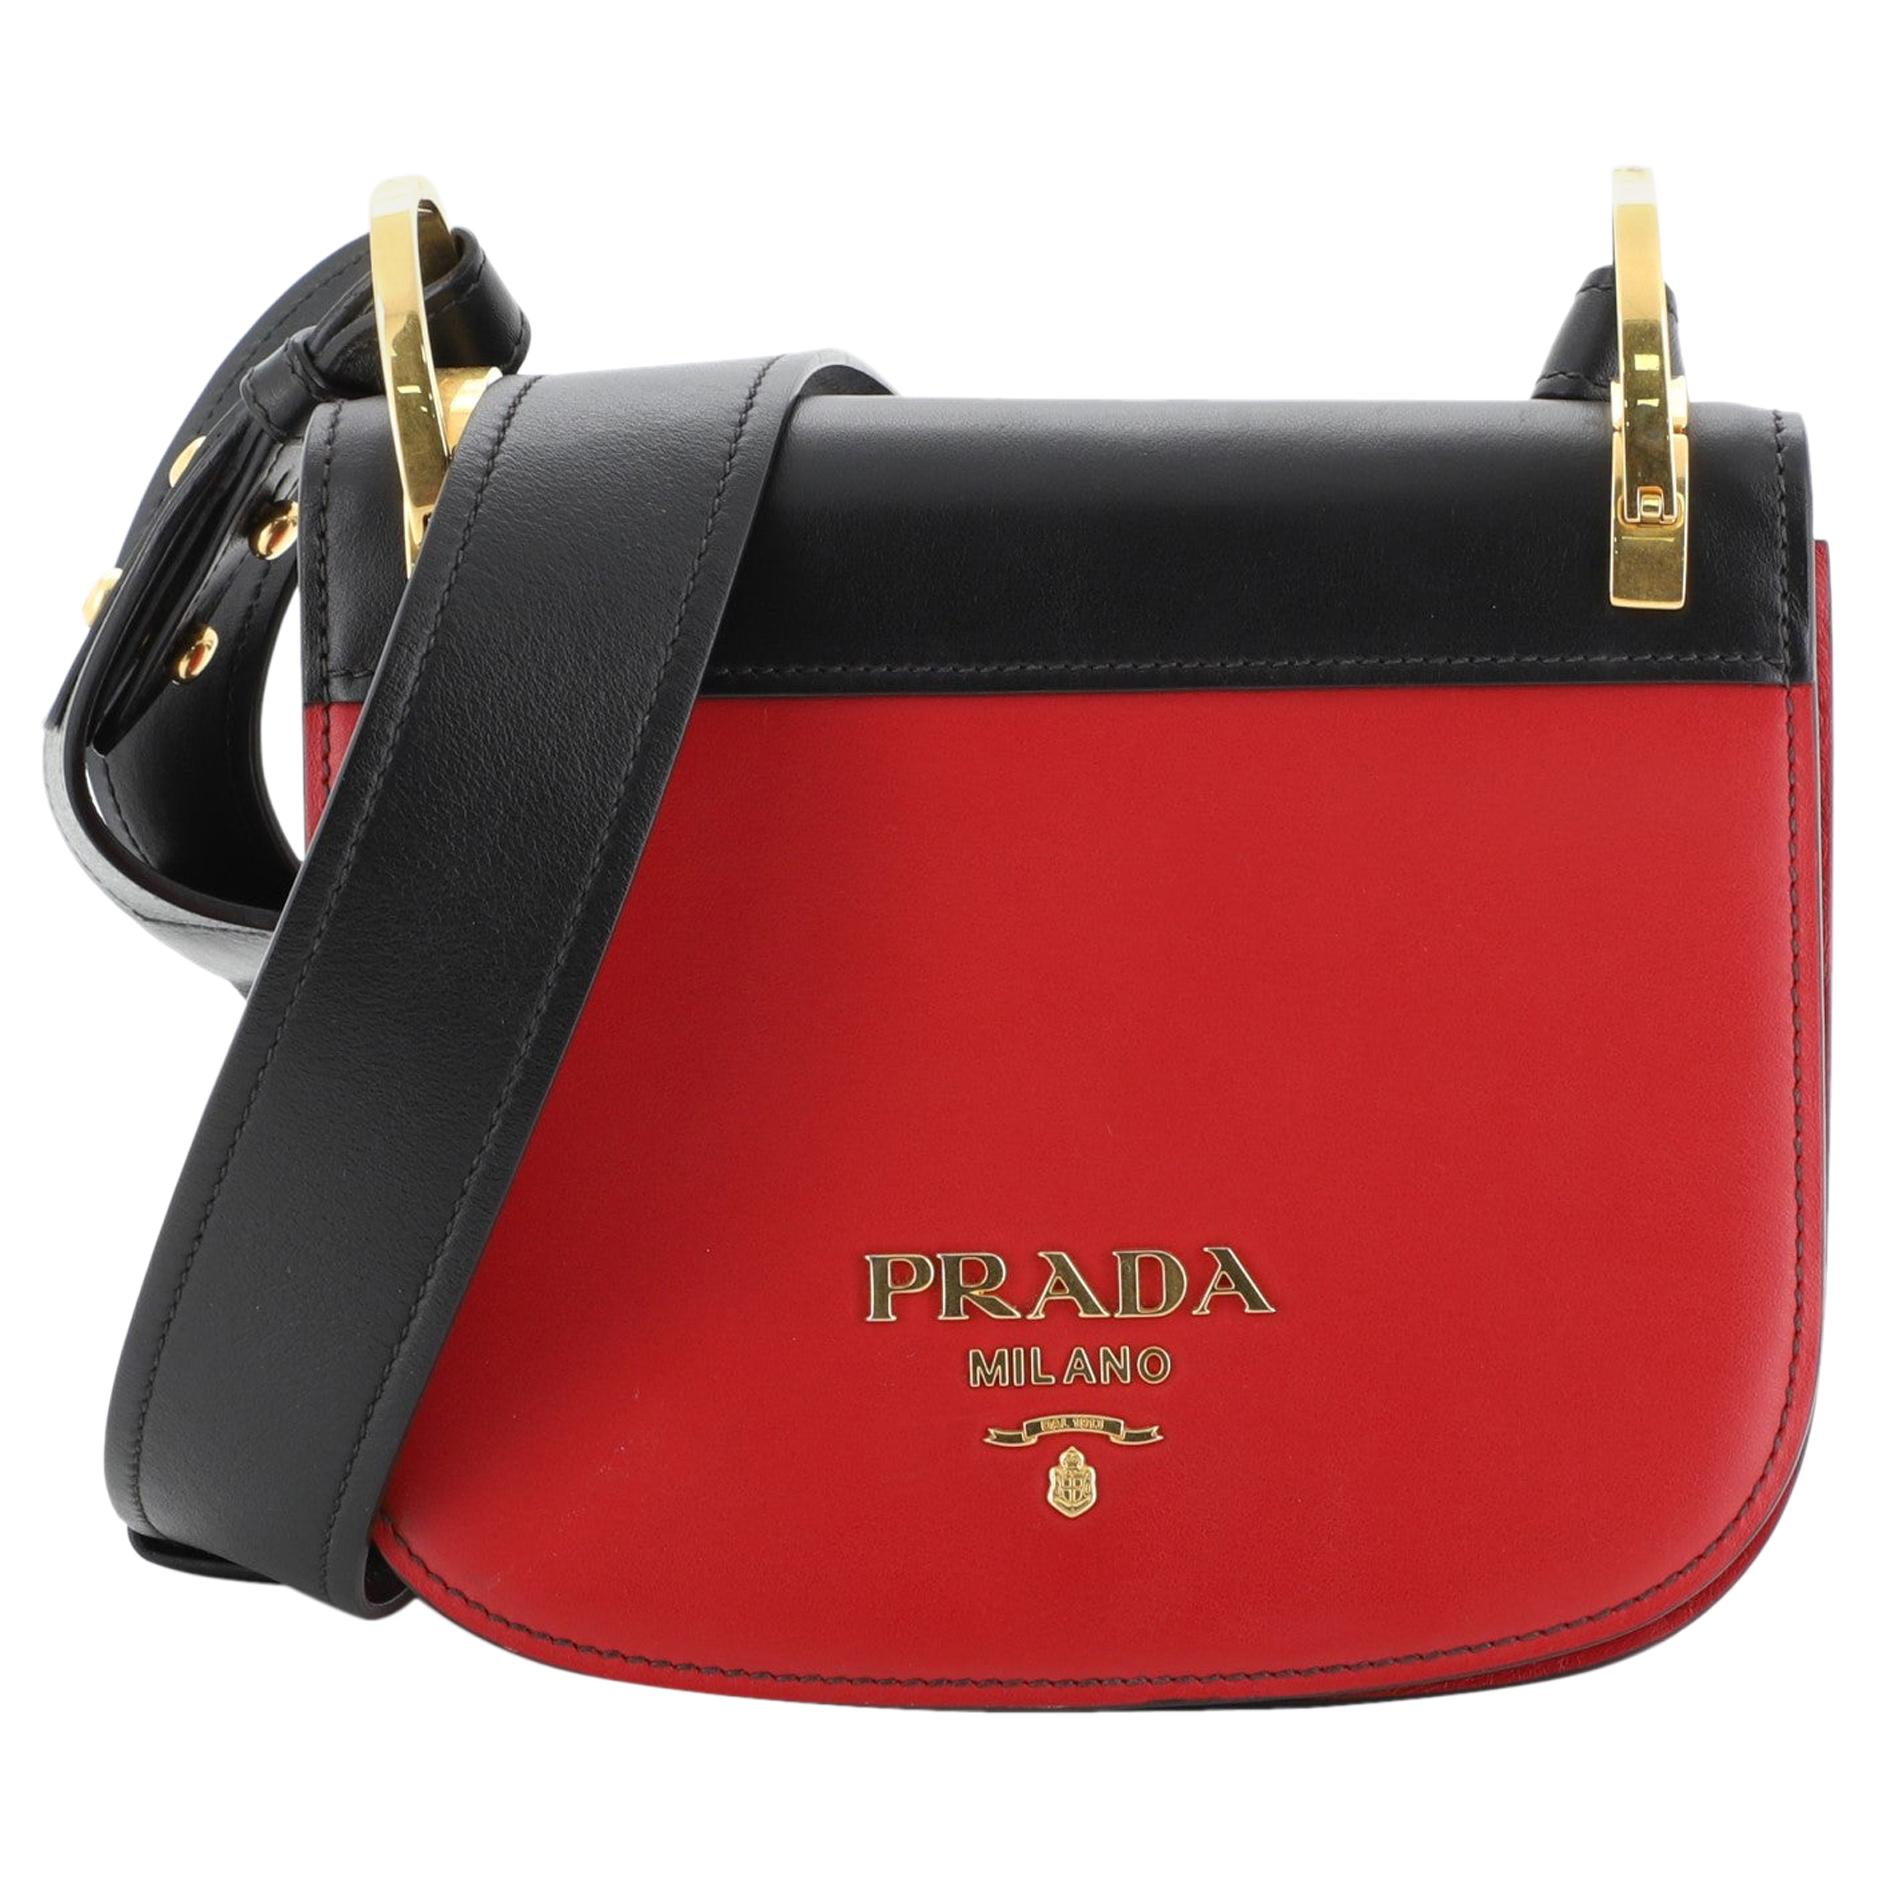 PRADA - Sling leather cross-body bag